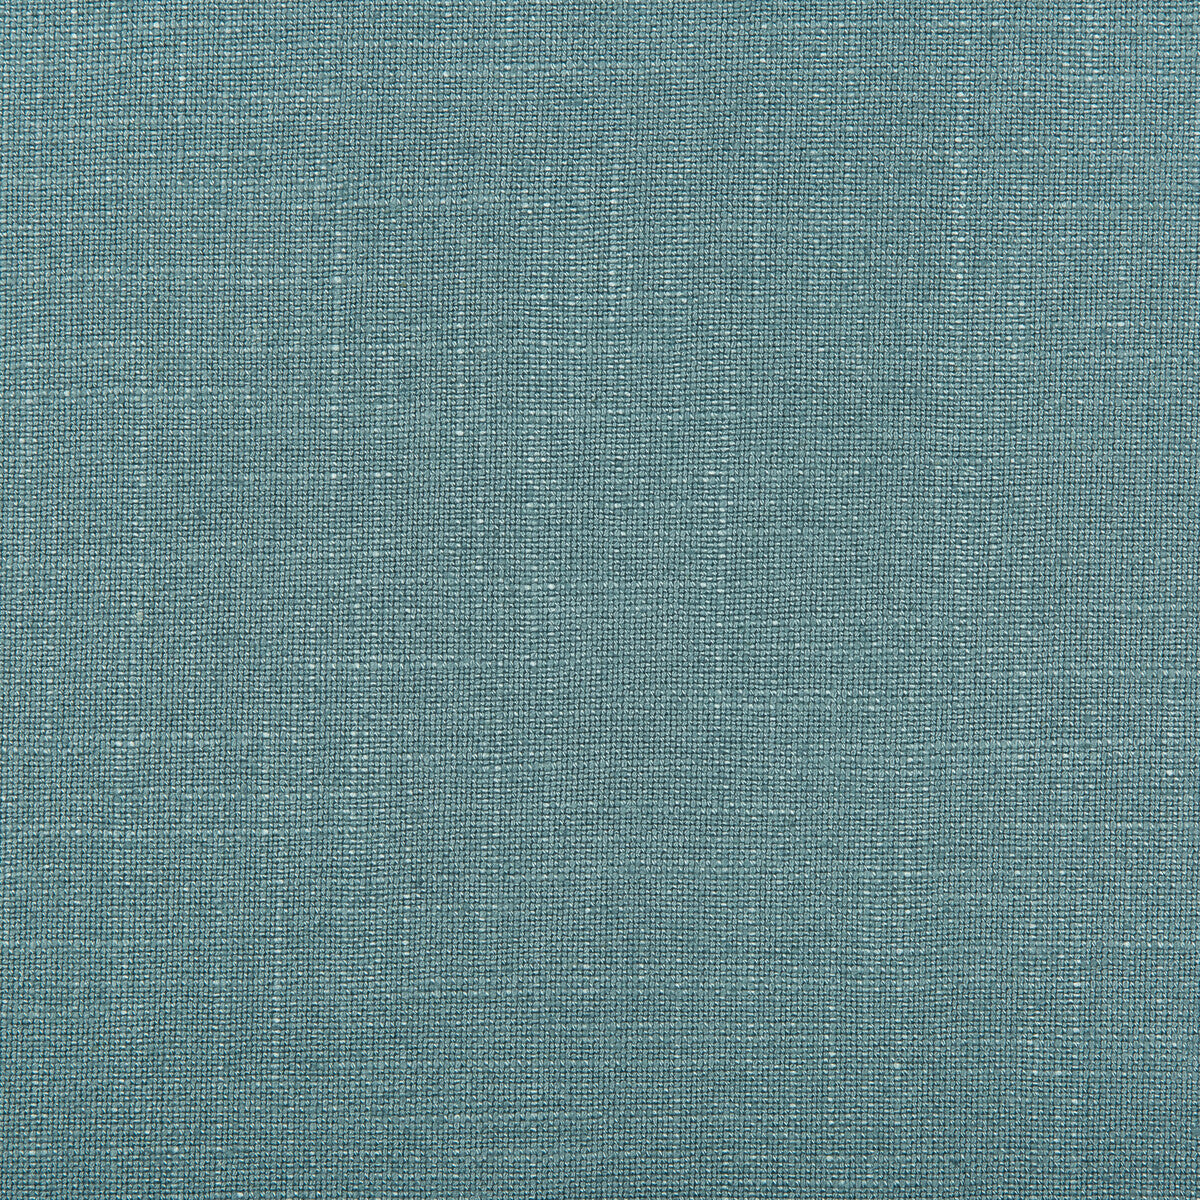 Aura fabric in caribbean color - pattern 35520.53.0 - by Kravet Design